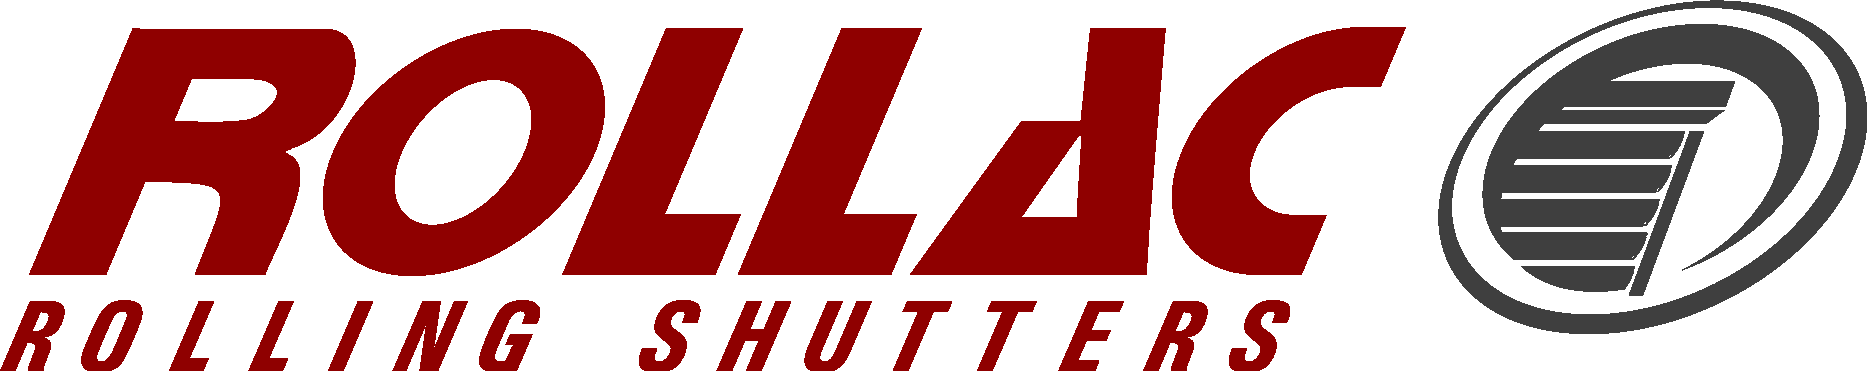 Rollac Shutters Logo Vector